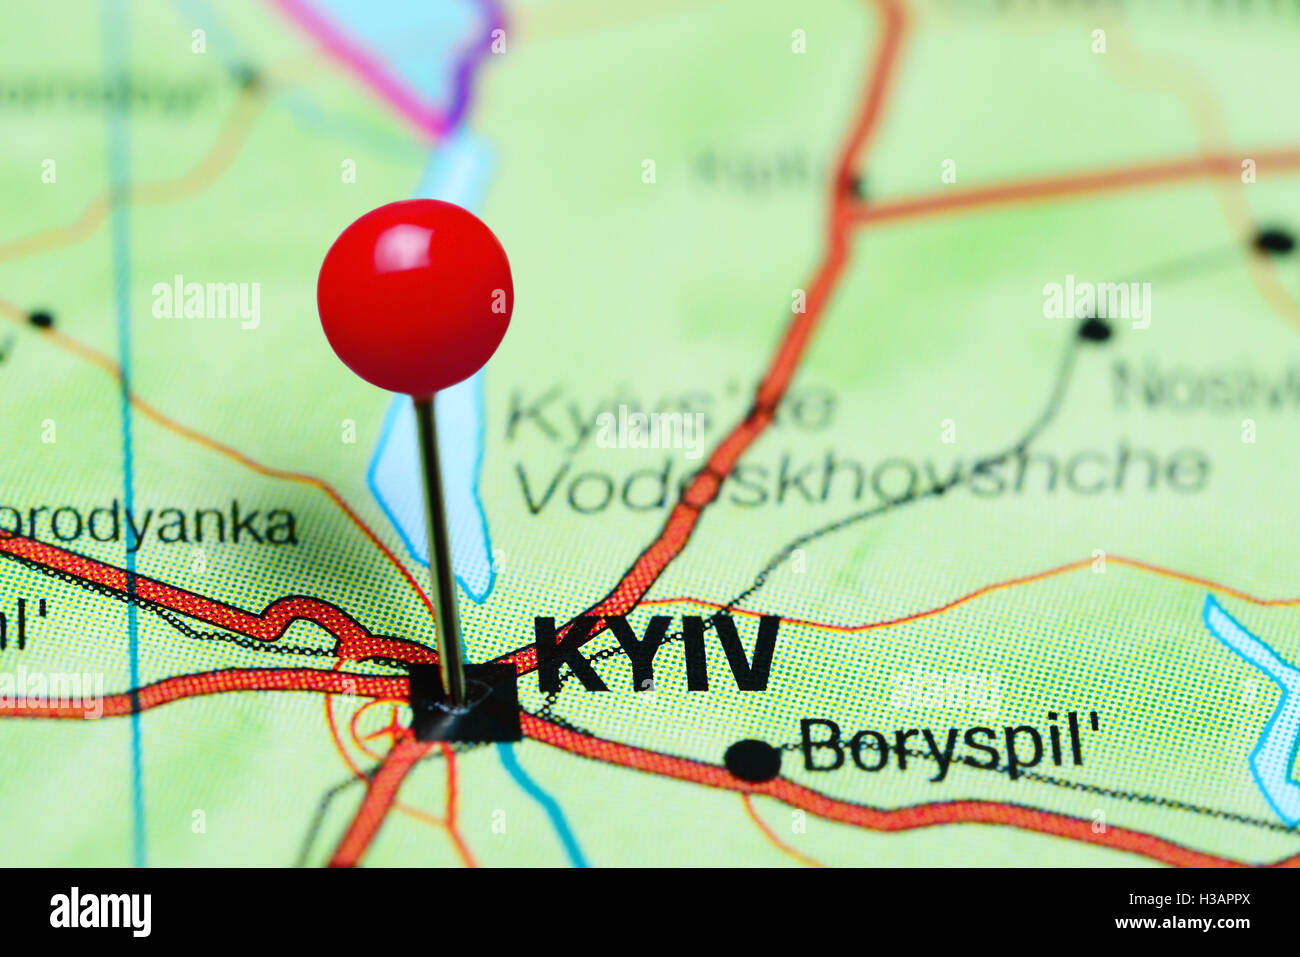 Kyiv pinned on a map of Ukraine Stock Photo